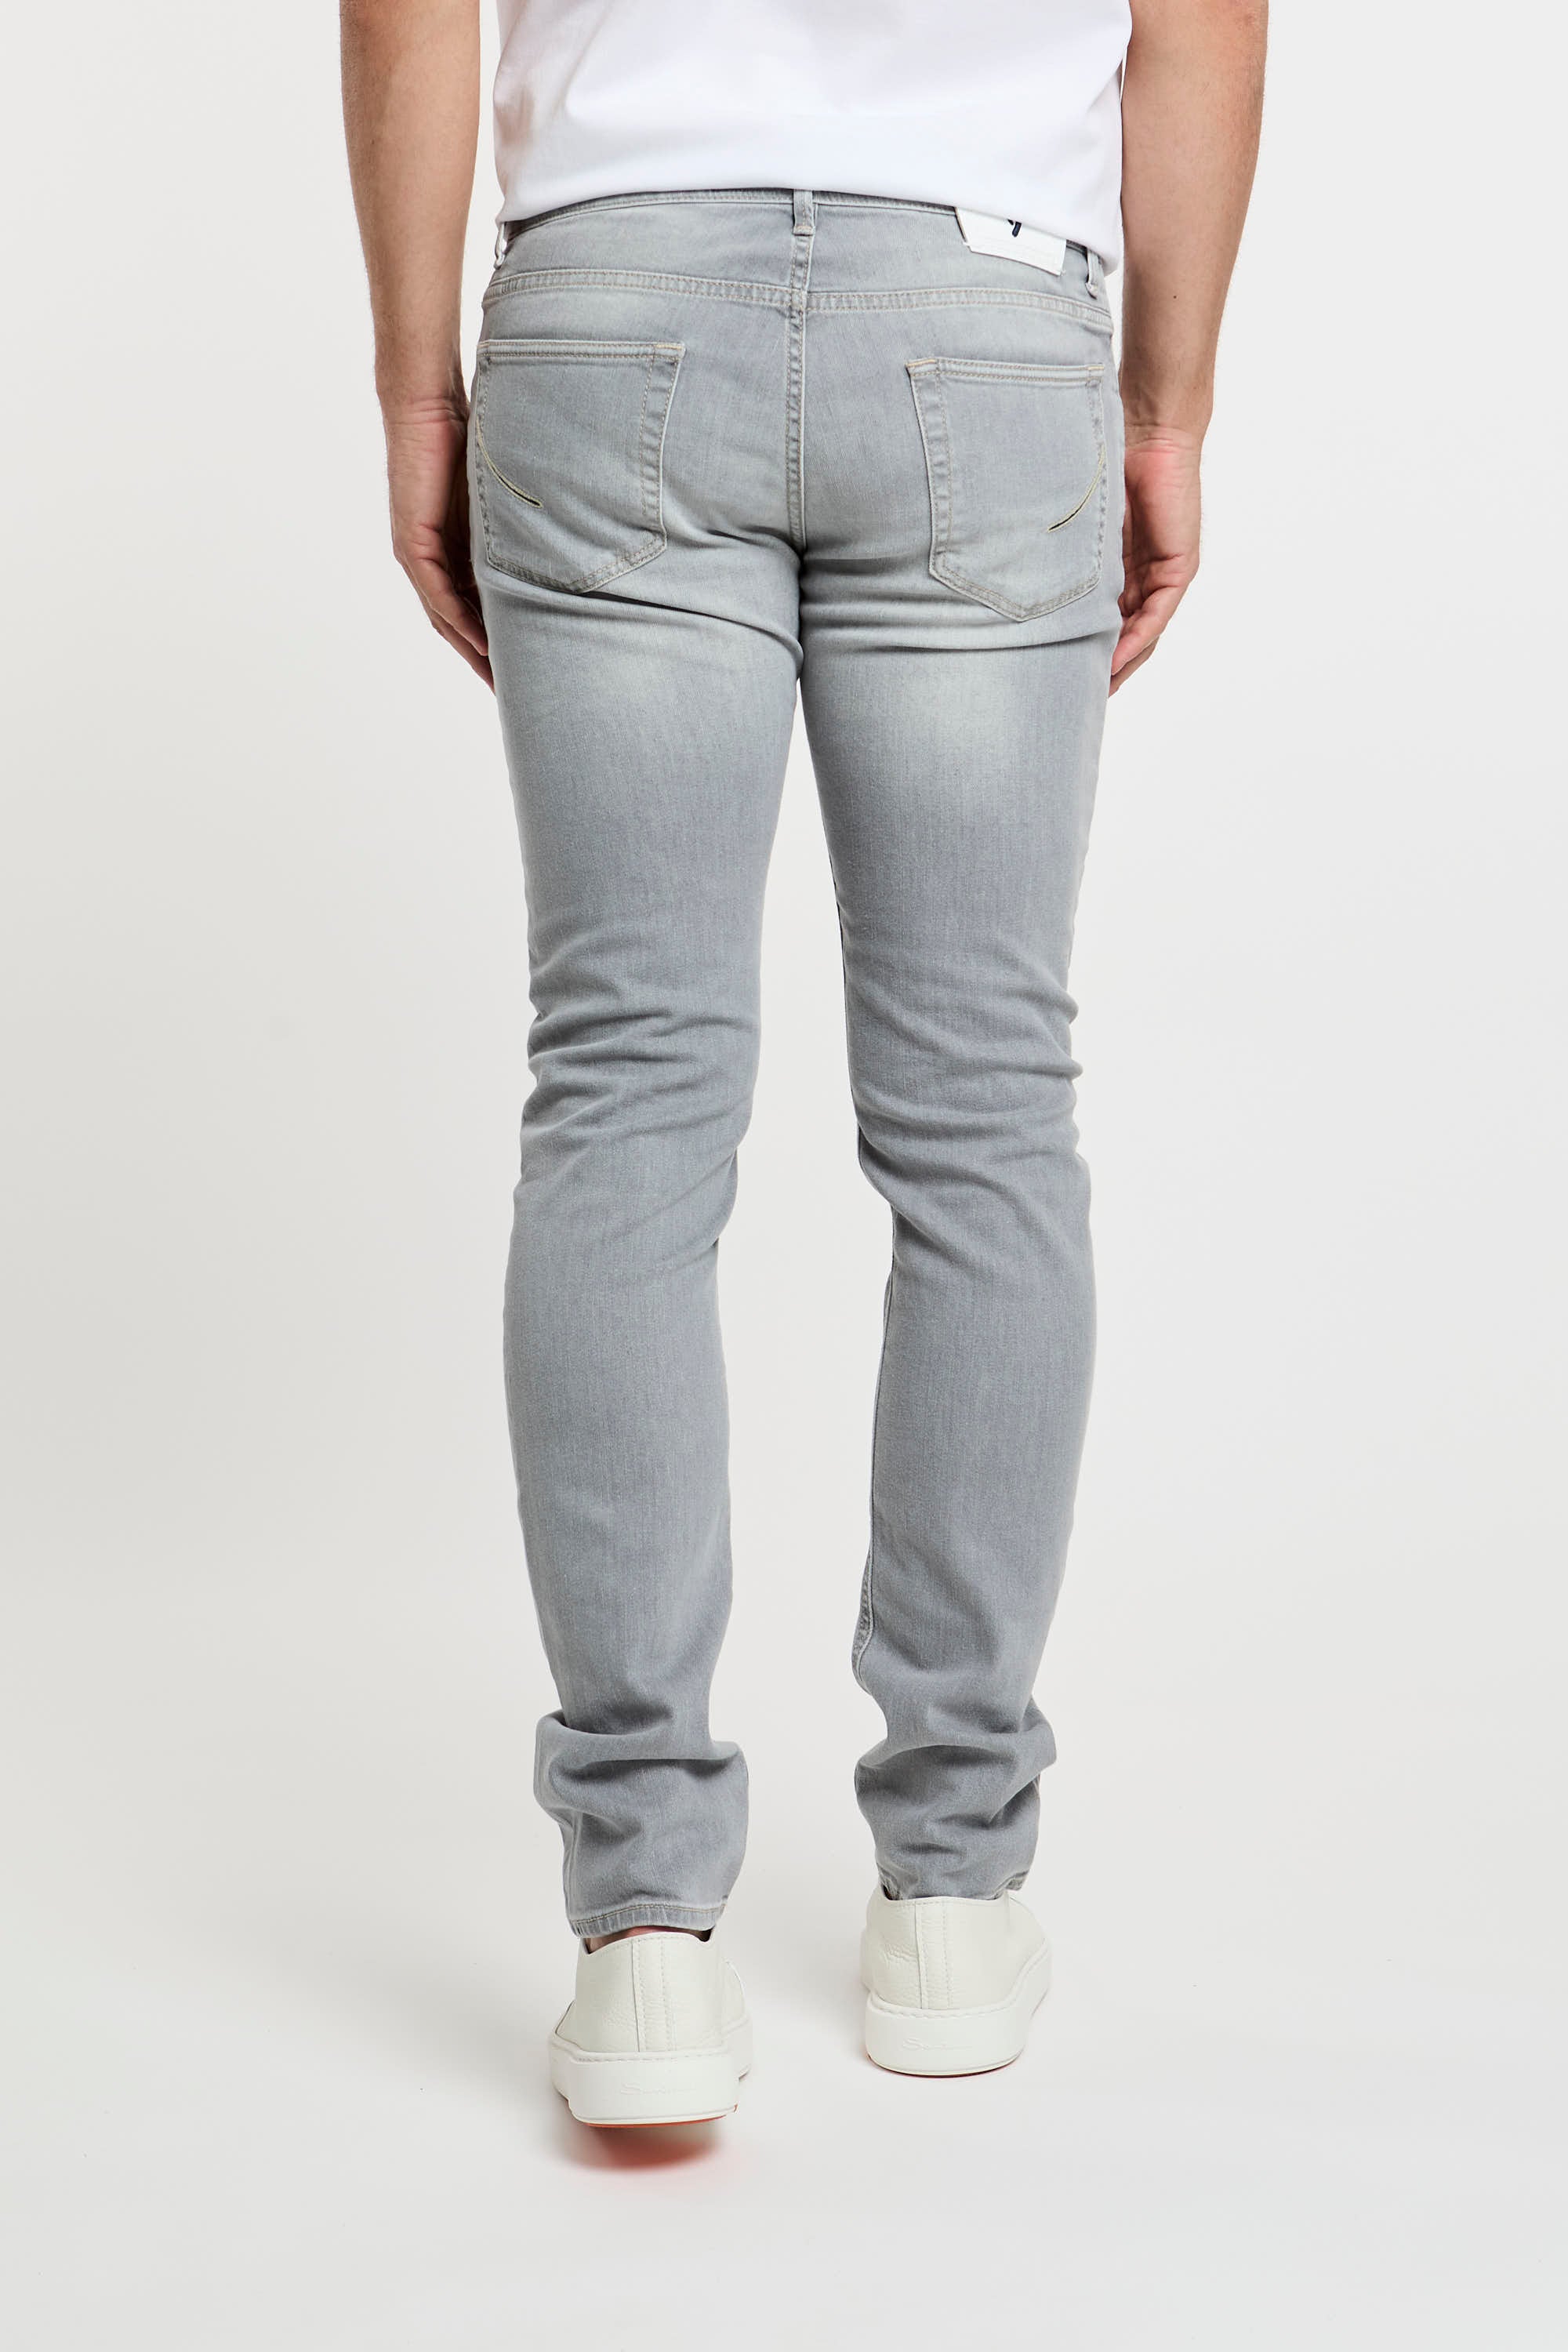 Handpicked Jeans Orvieto Cotton Grey-5